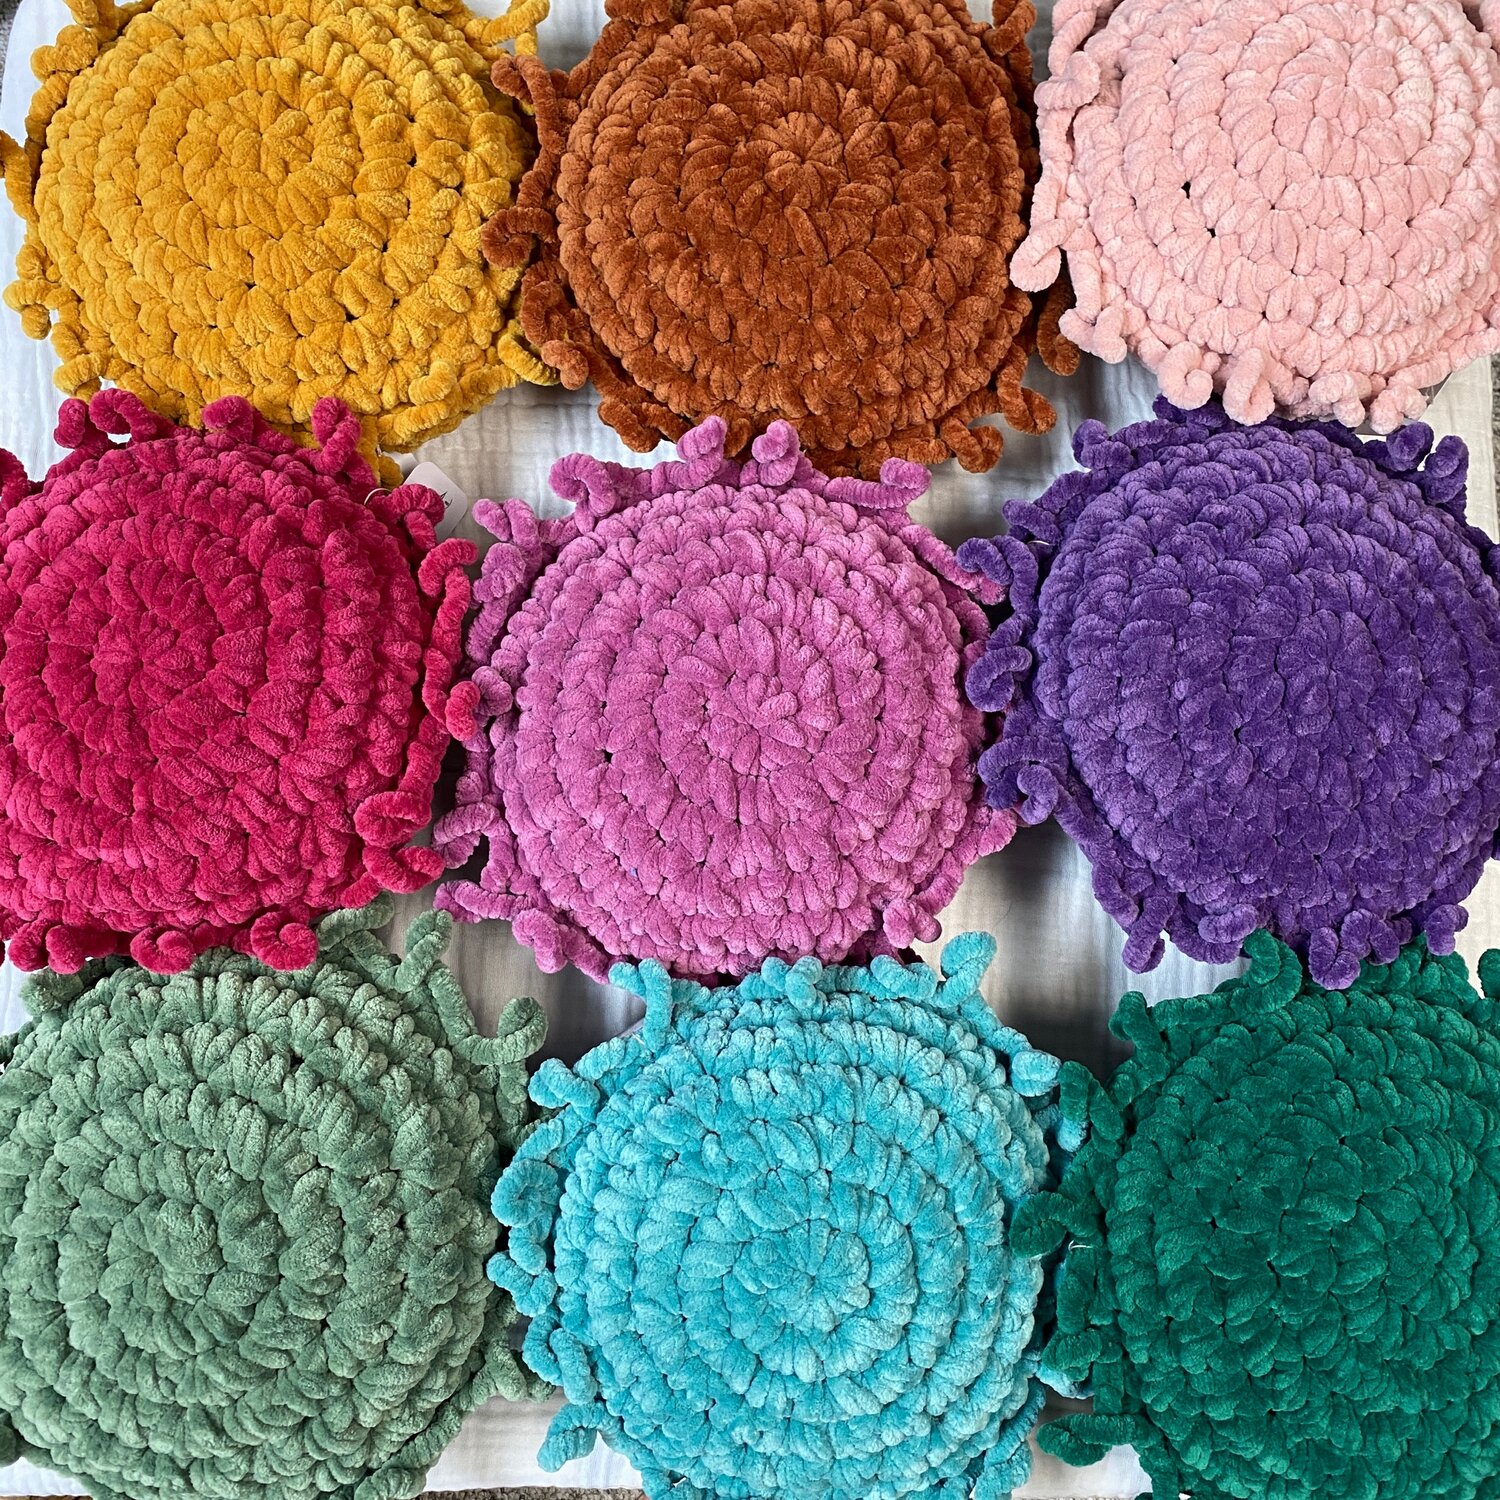 Creekside Crochet: Technical Tuesday - Liquid Stitch Cheat